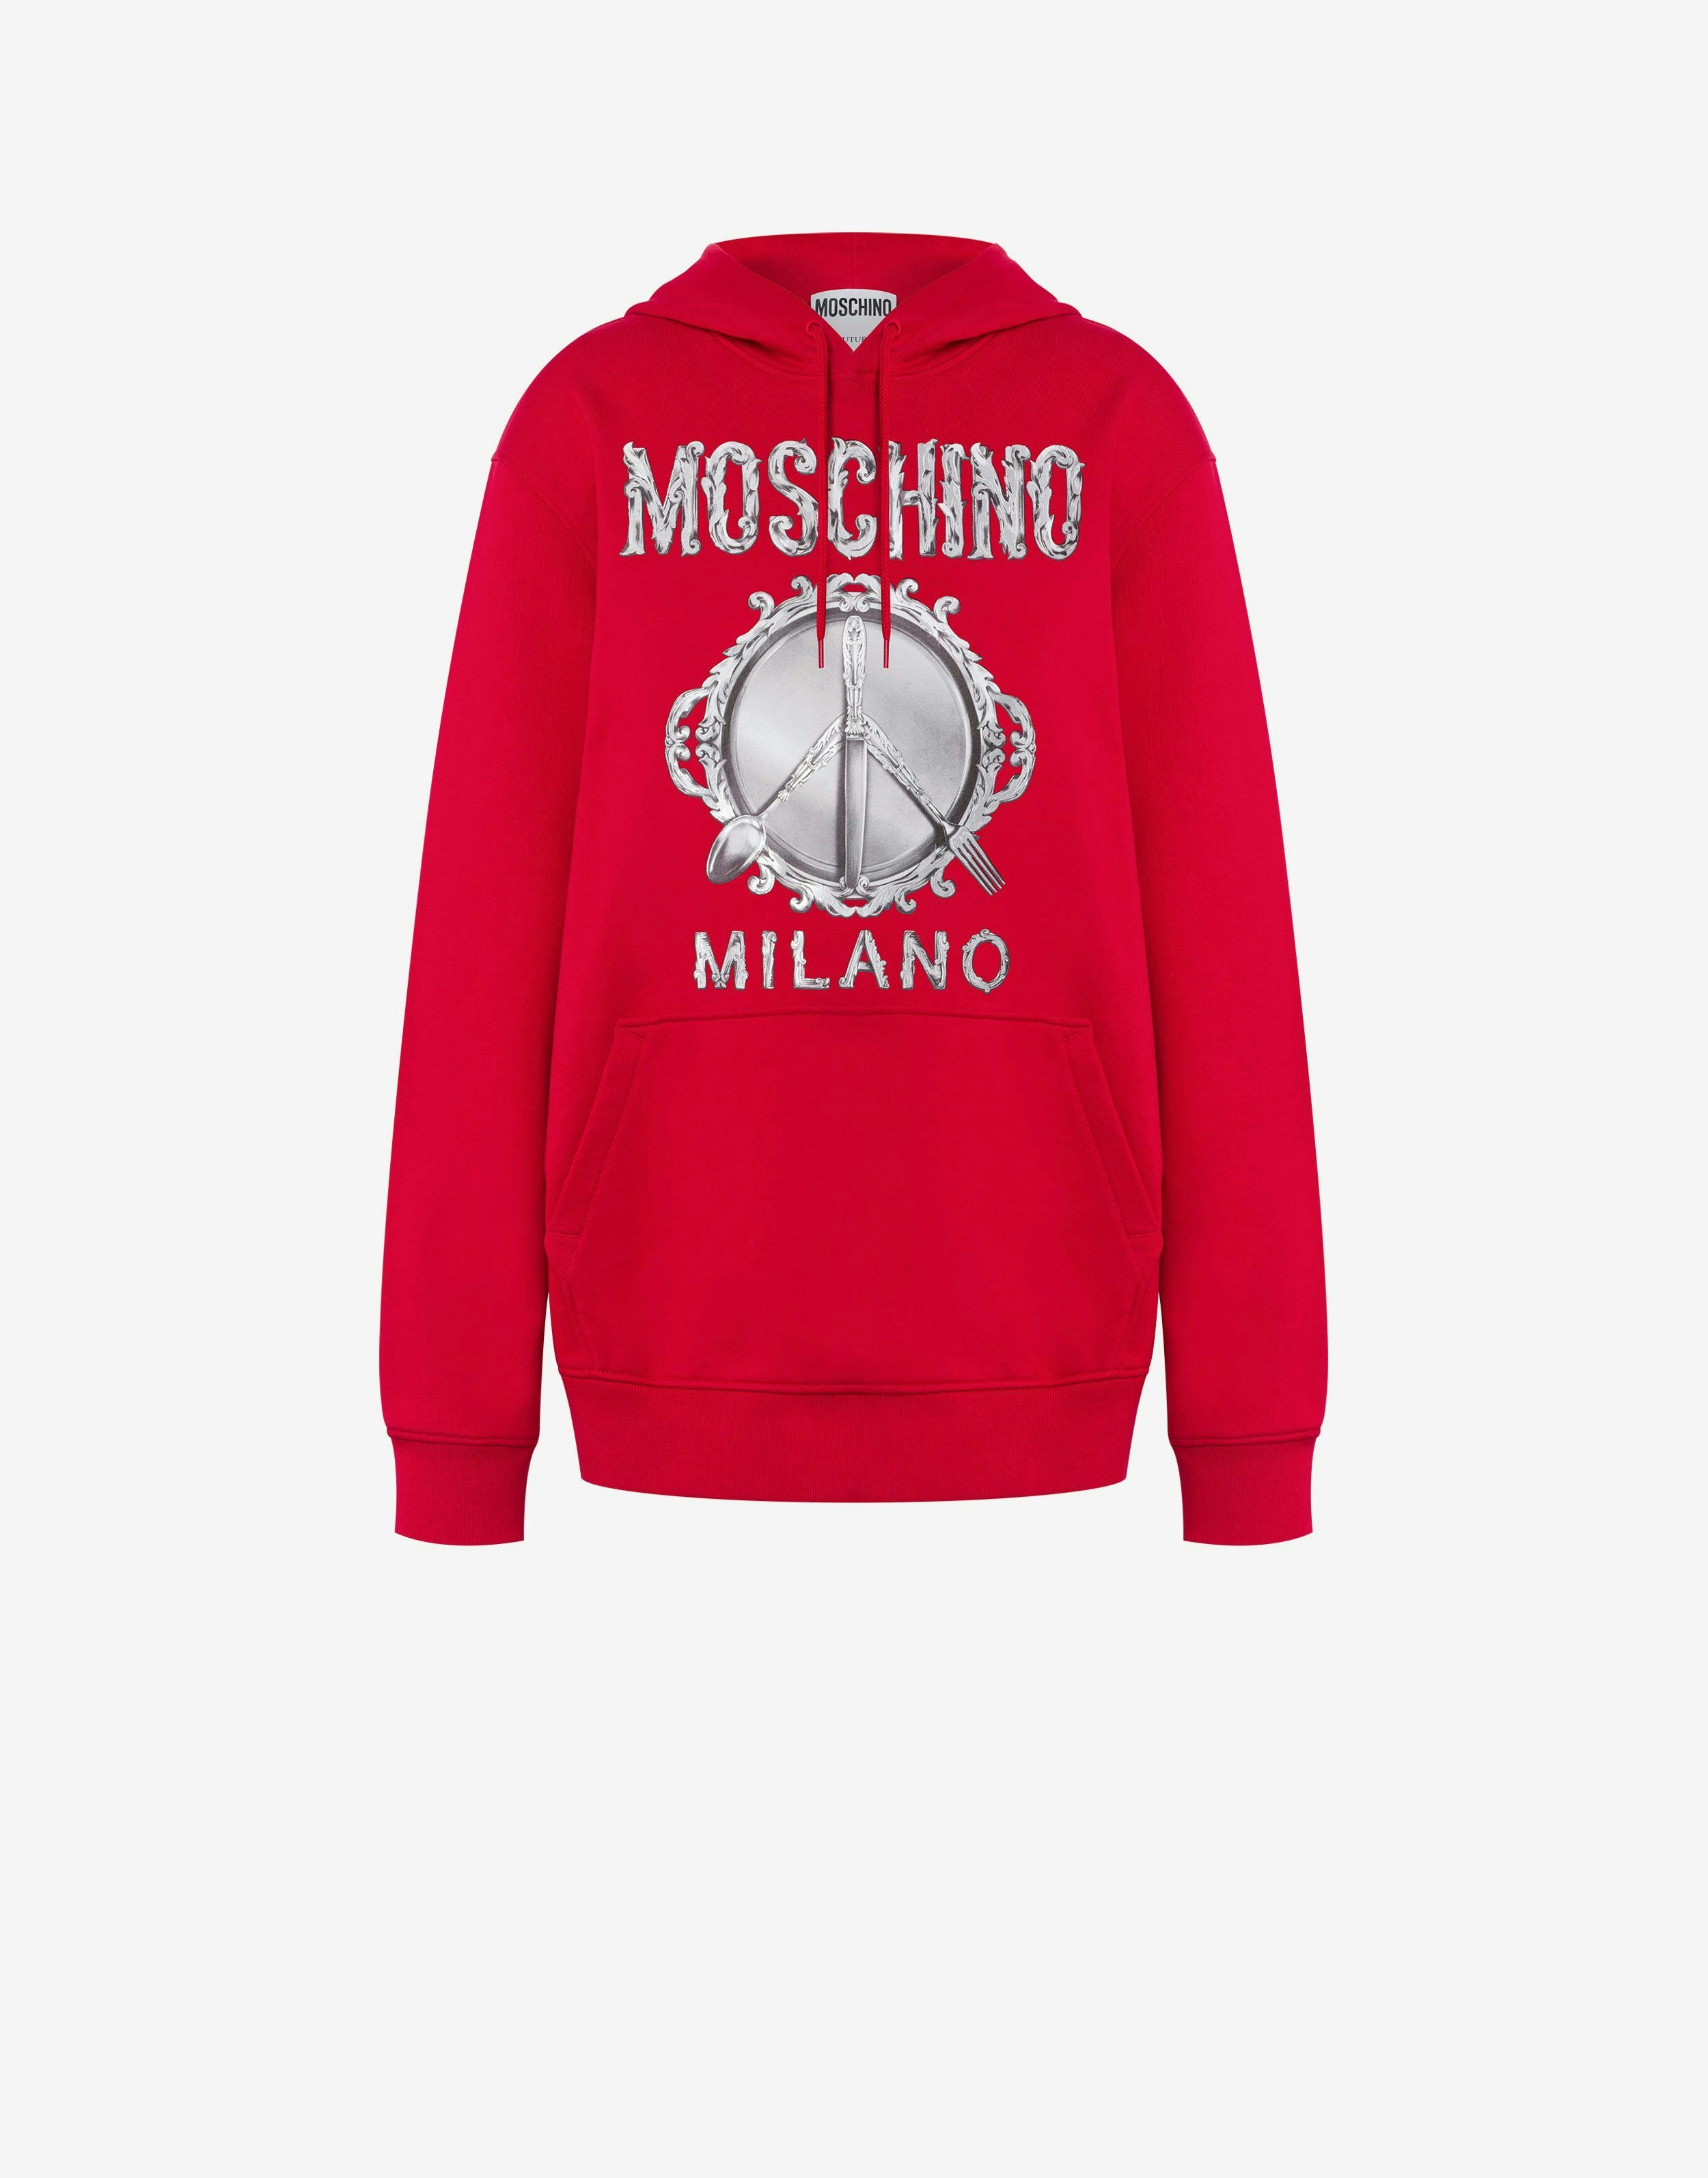 Moschino Love Moschino Sweatshirt Womens 12 fitted bnwt fit 10-12 